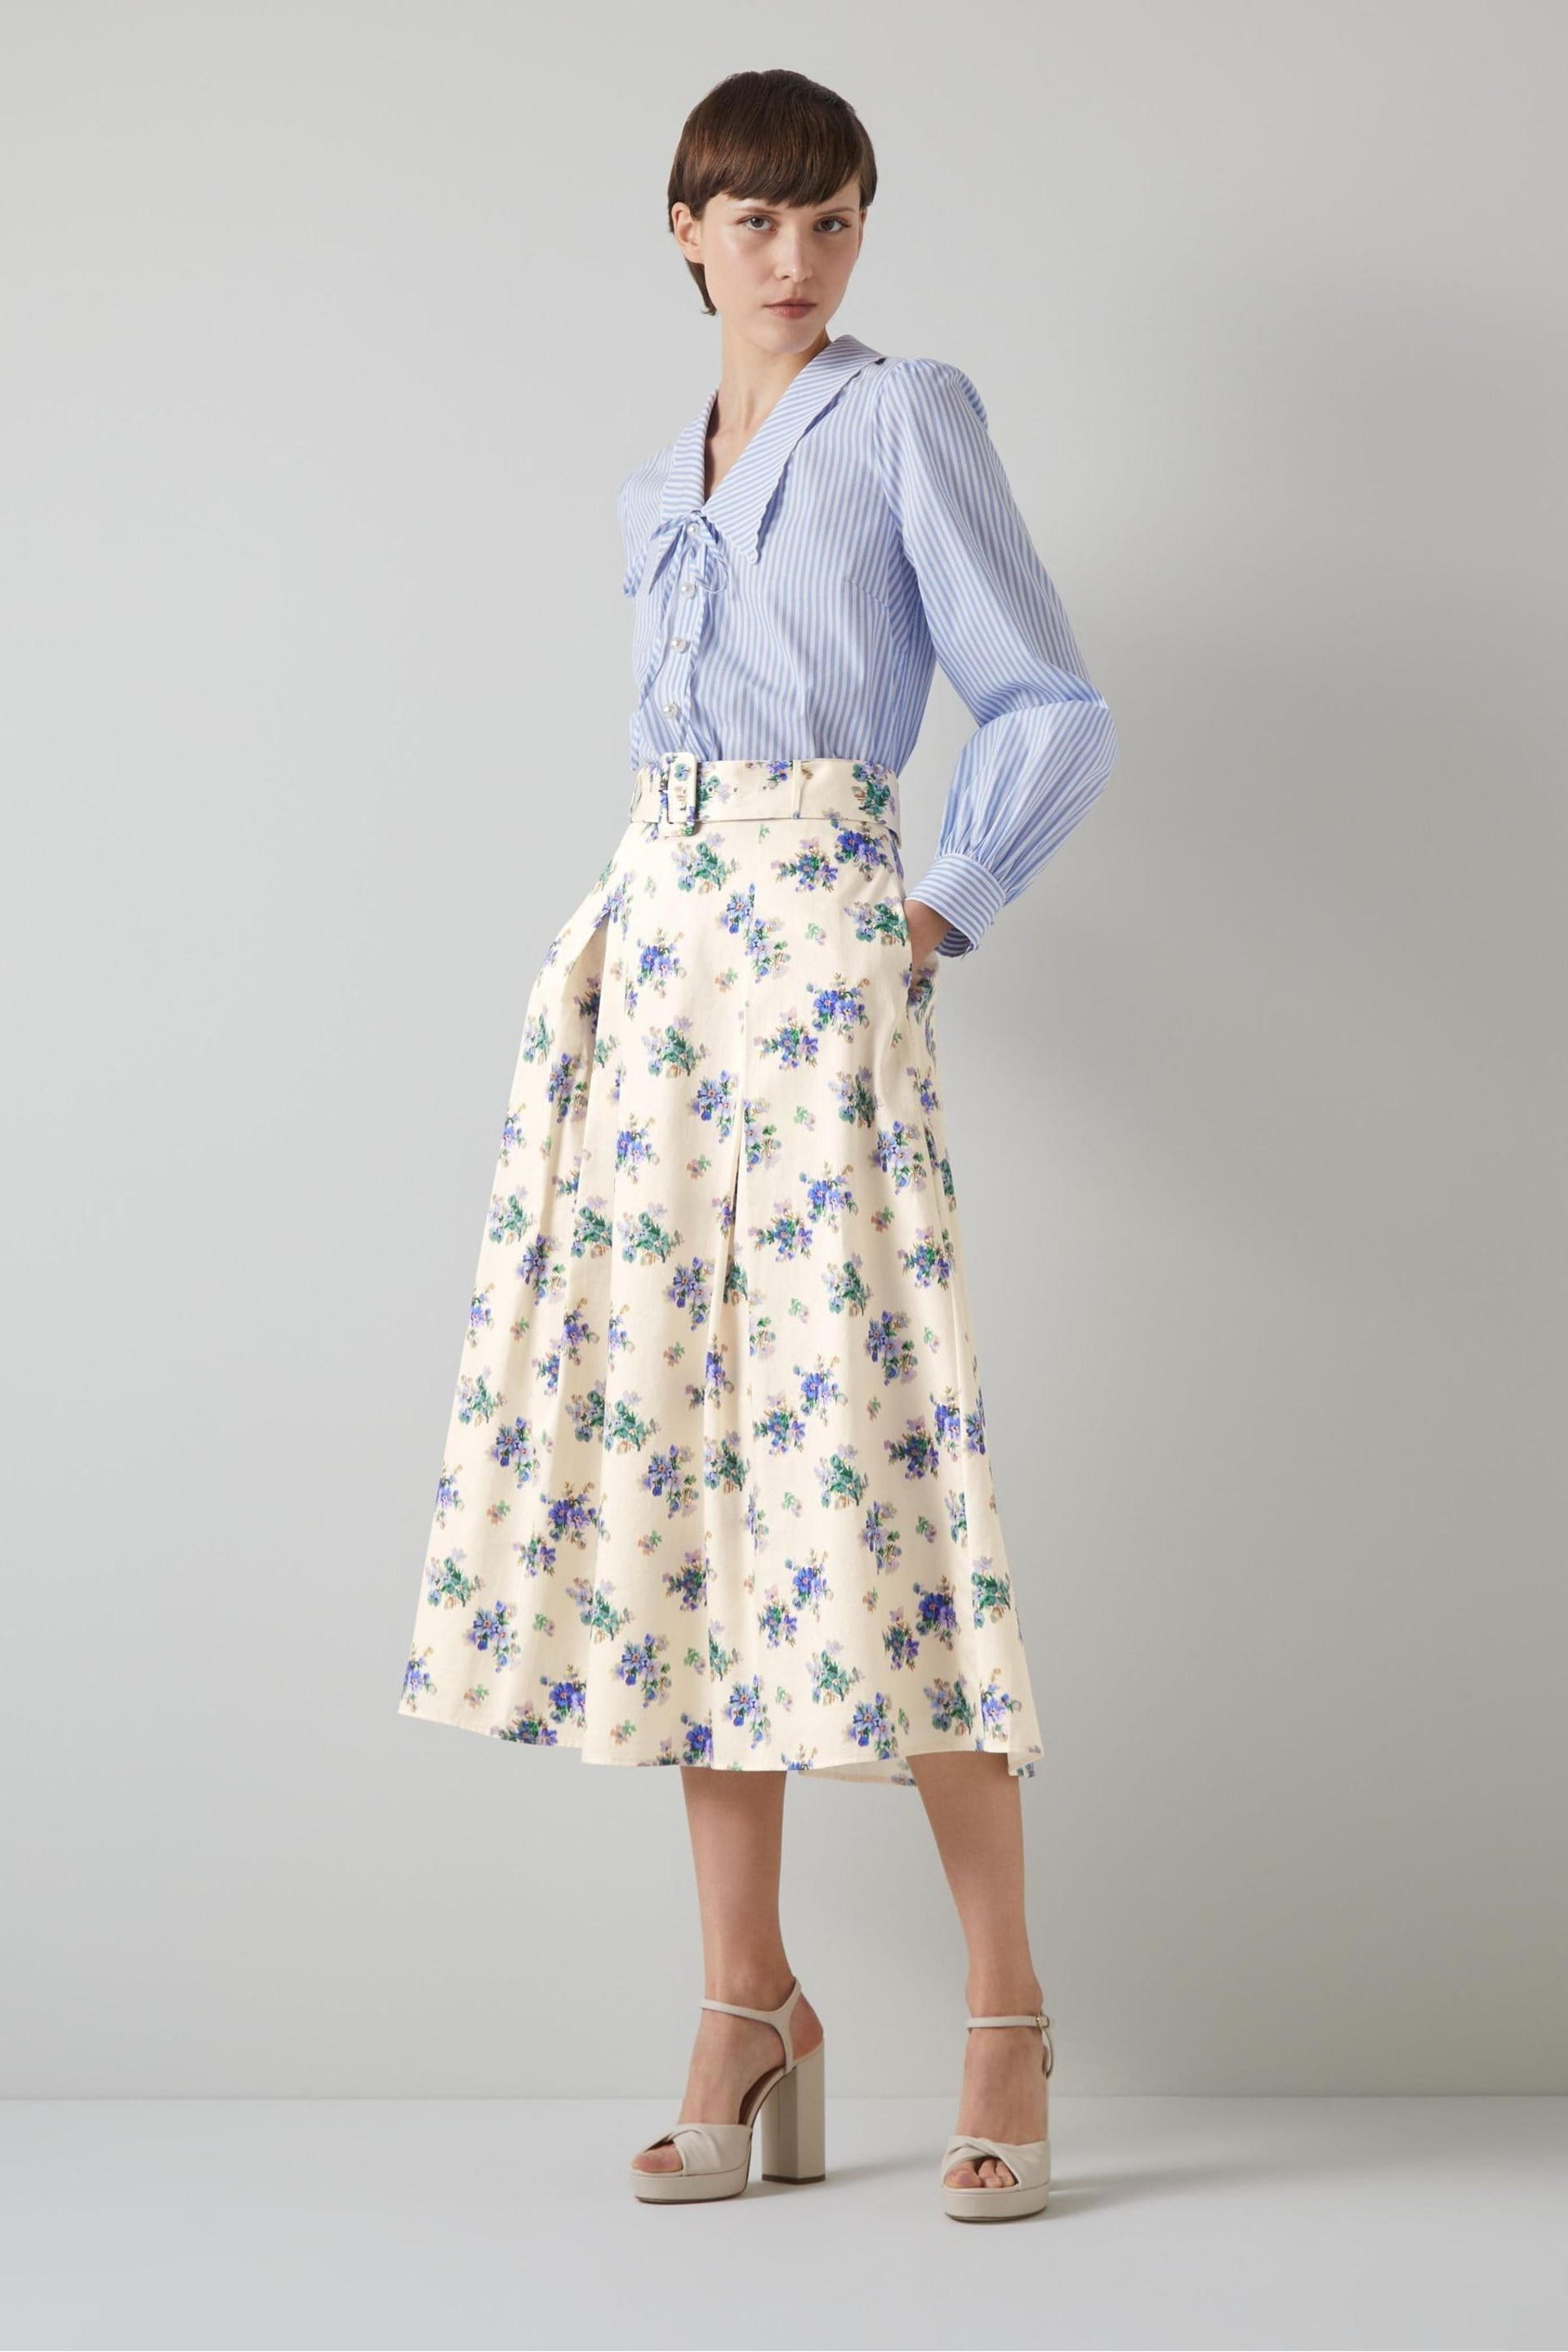 LK Bennett Elodie Bouquet Print Cotton Skirt - Image 1 of 3